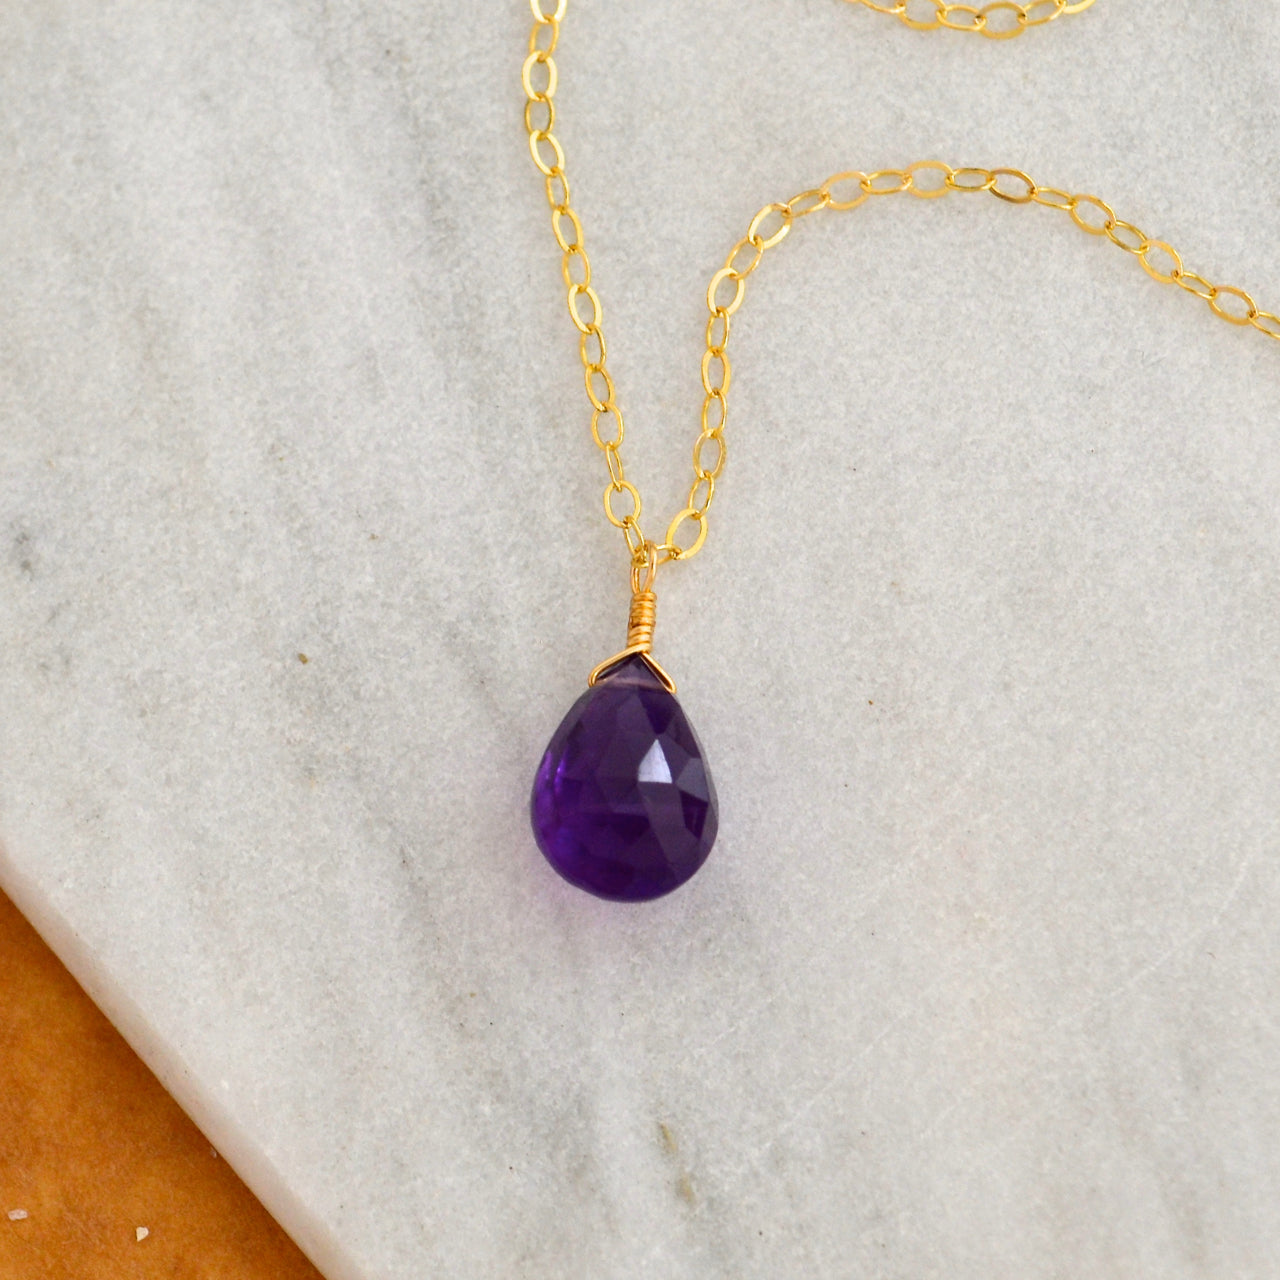 Passiflora Necklace: Dark Purple Amethyst Necklace Gemstone Pendant Sustainable Jewelry Gold filled Necklace Handmade Gemstone Necklace with Stone